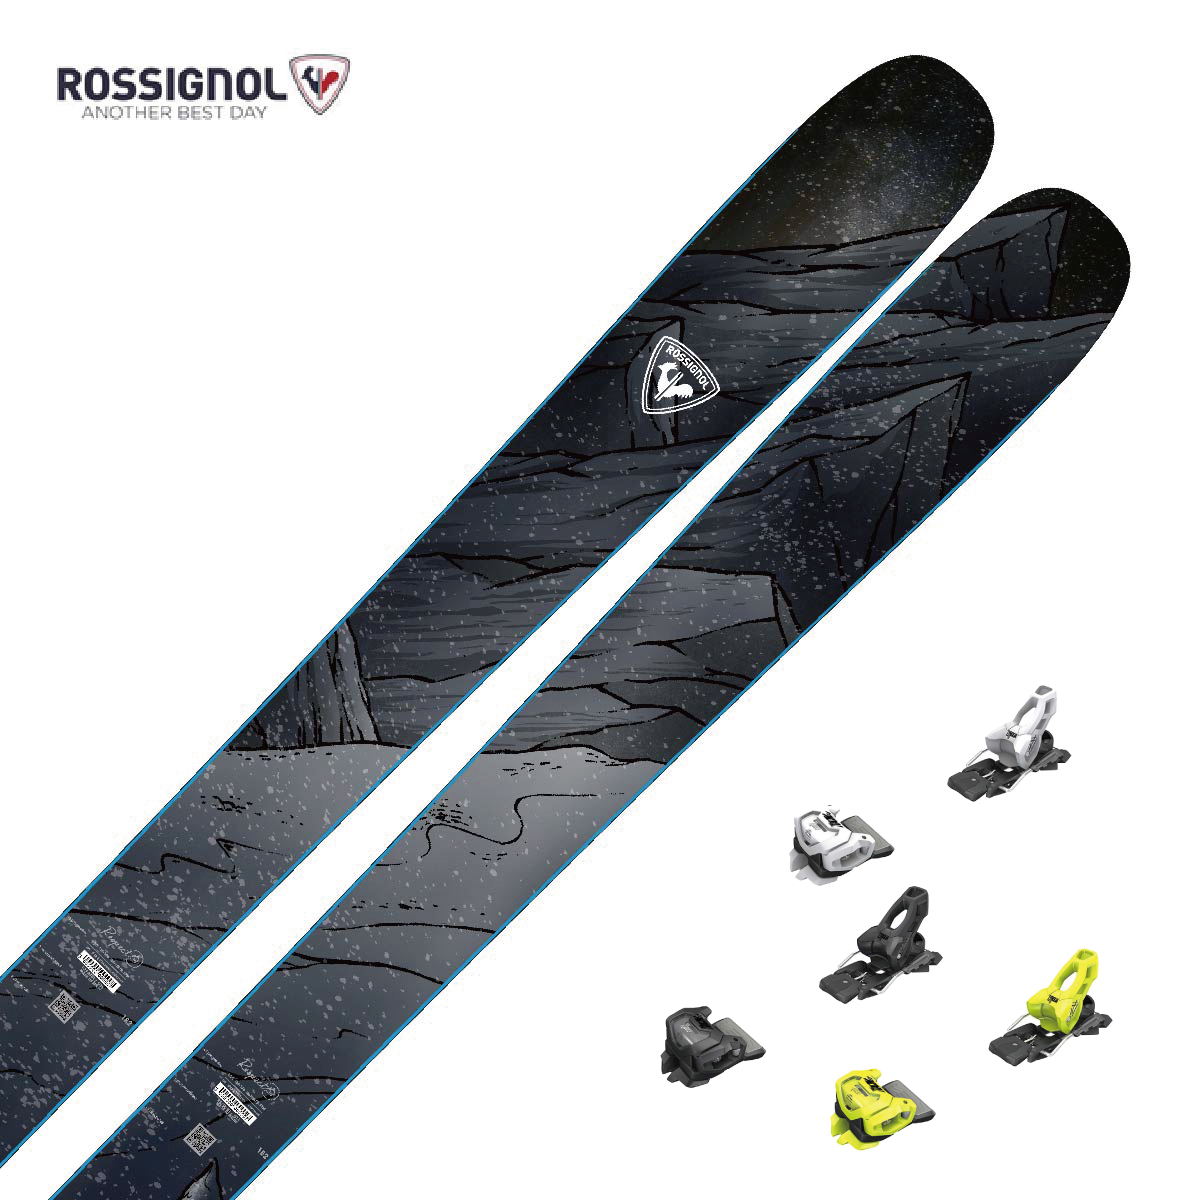 All Mountain Skis - Ski Shop - Japanese Brand Ski Gear and 